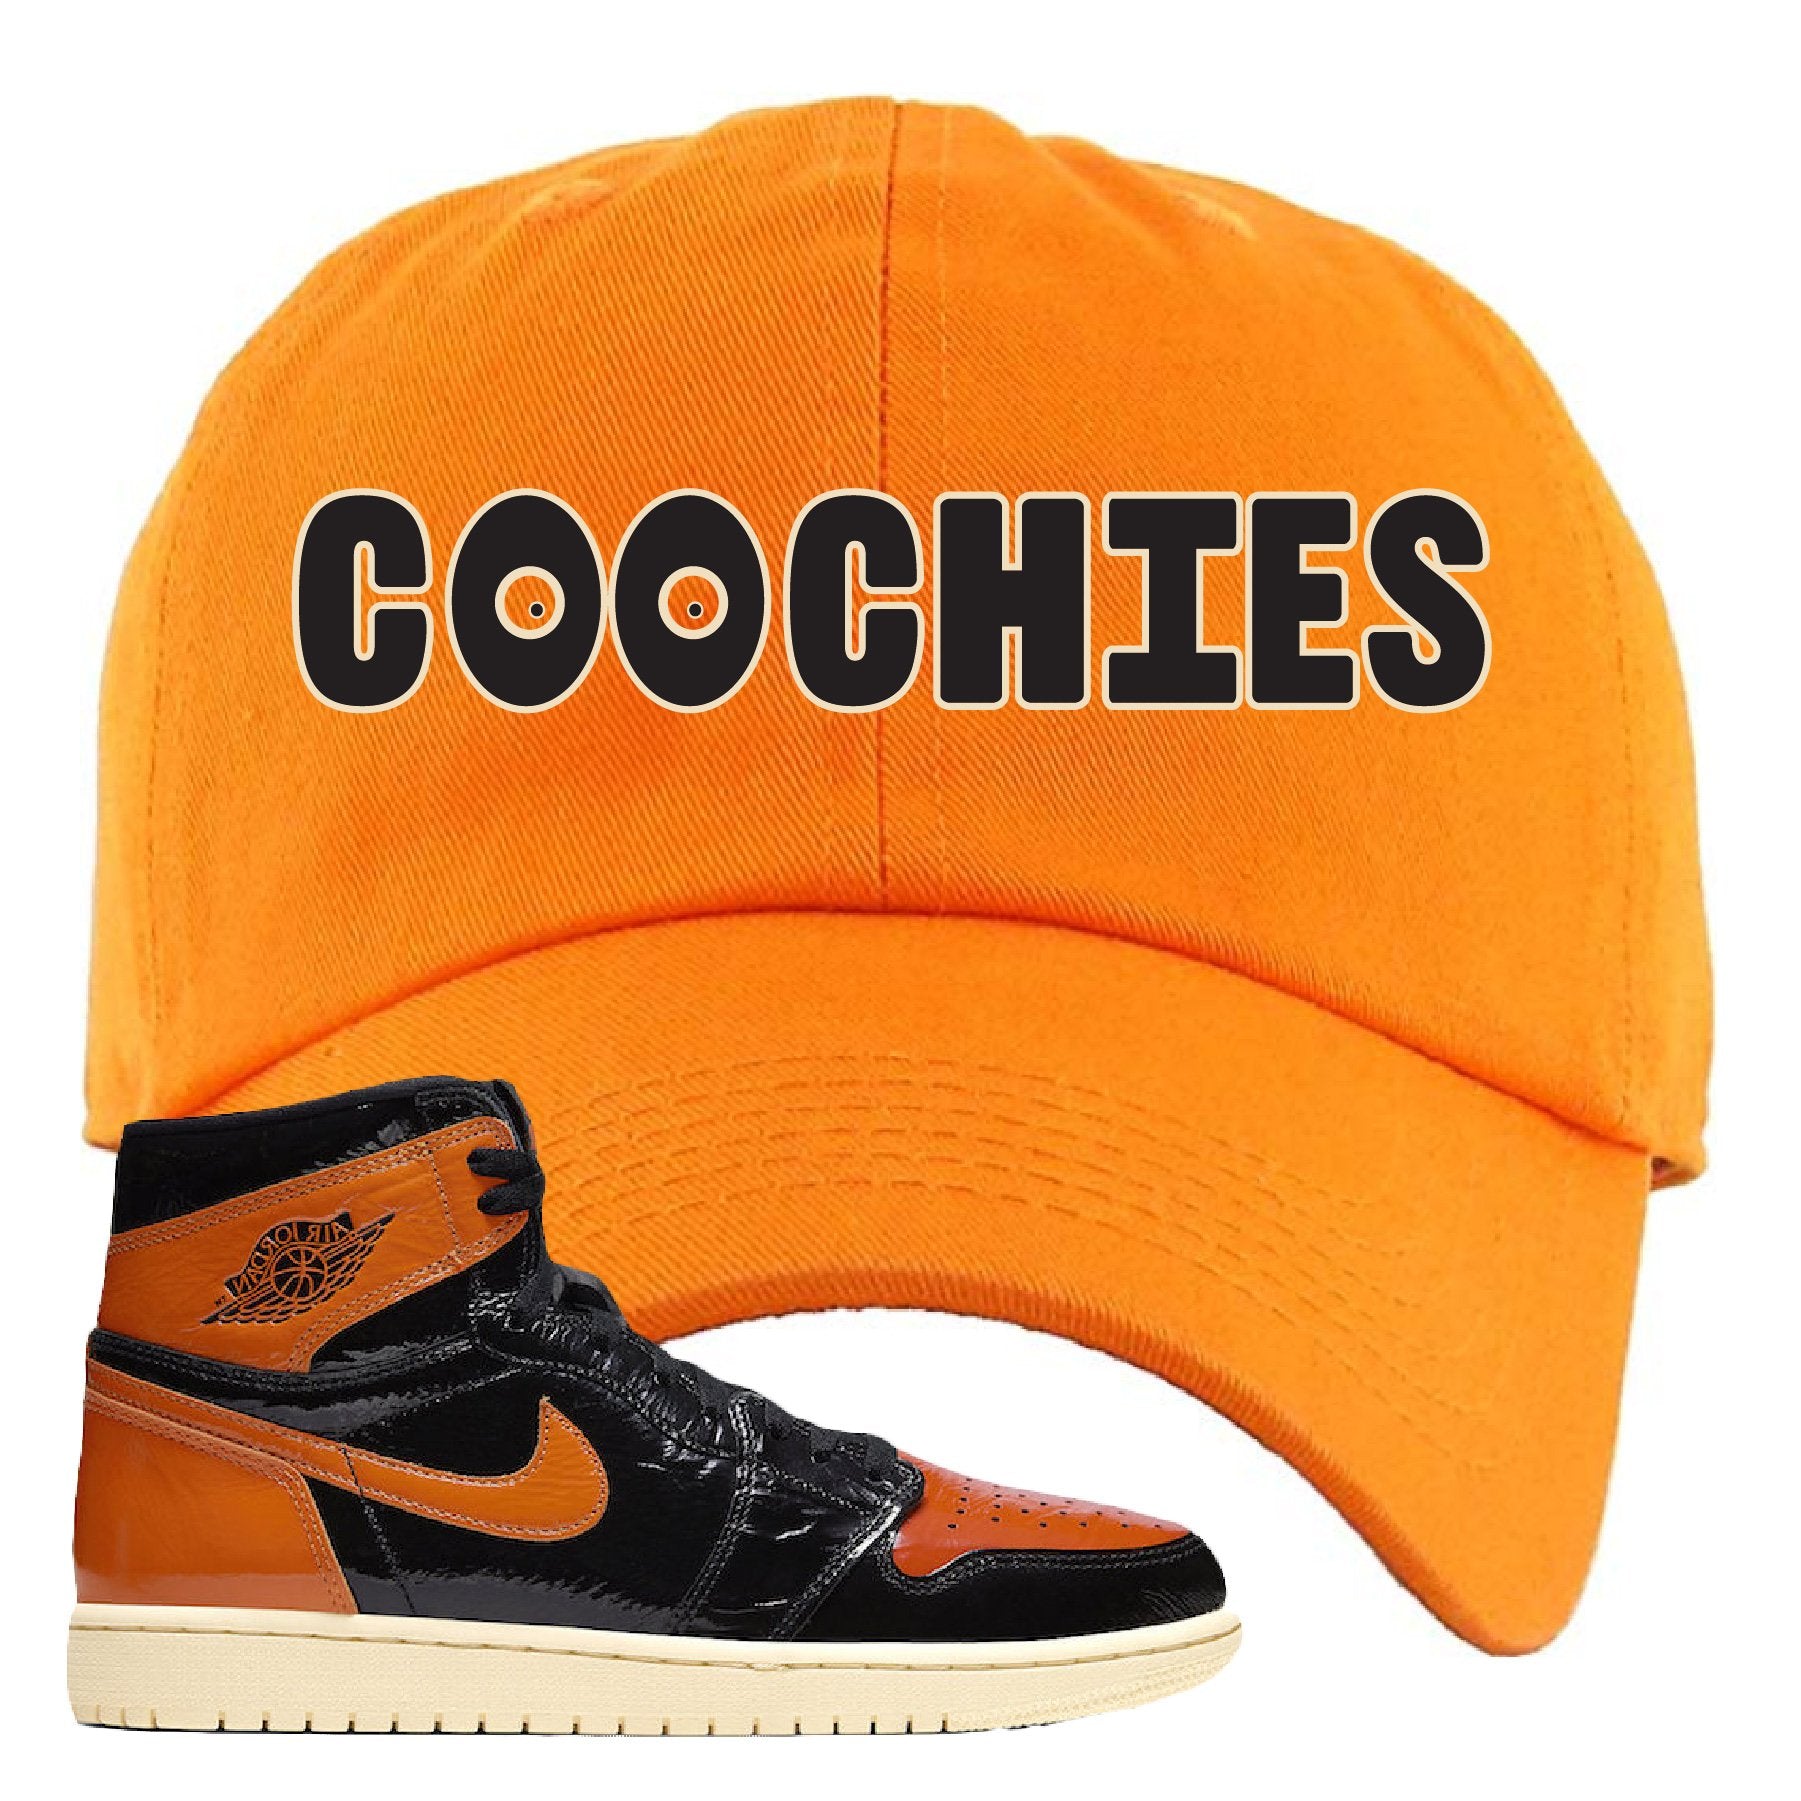 Jordan 1 Shattered Backboard Coochies Orange Sneaker Hook Up Dad Hat